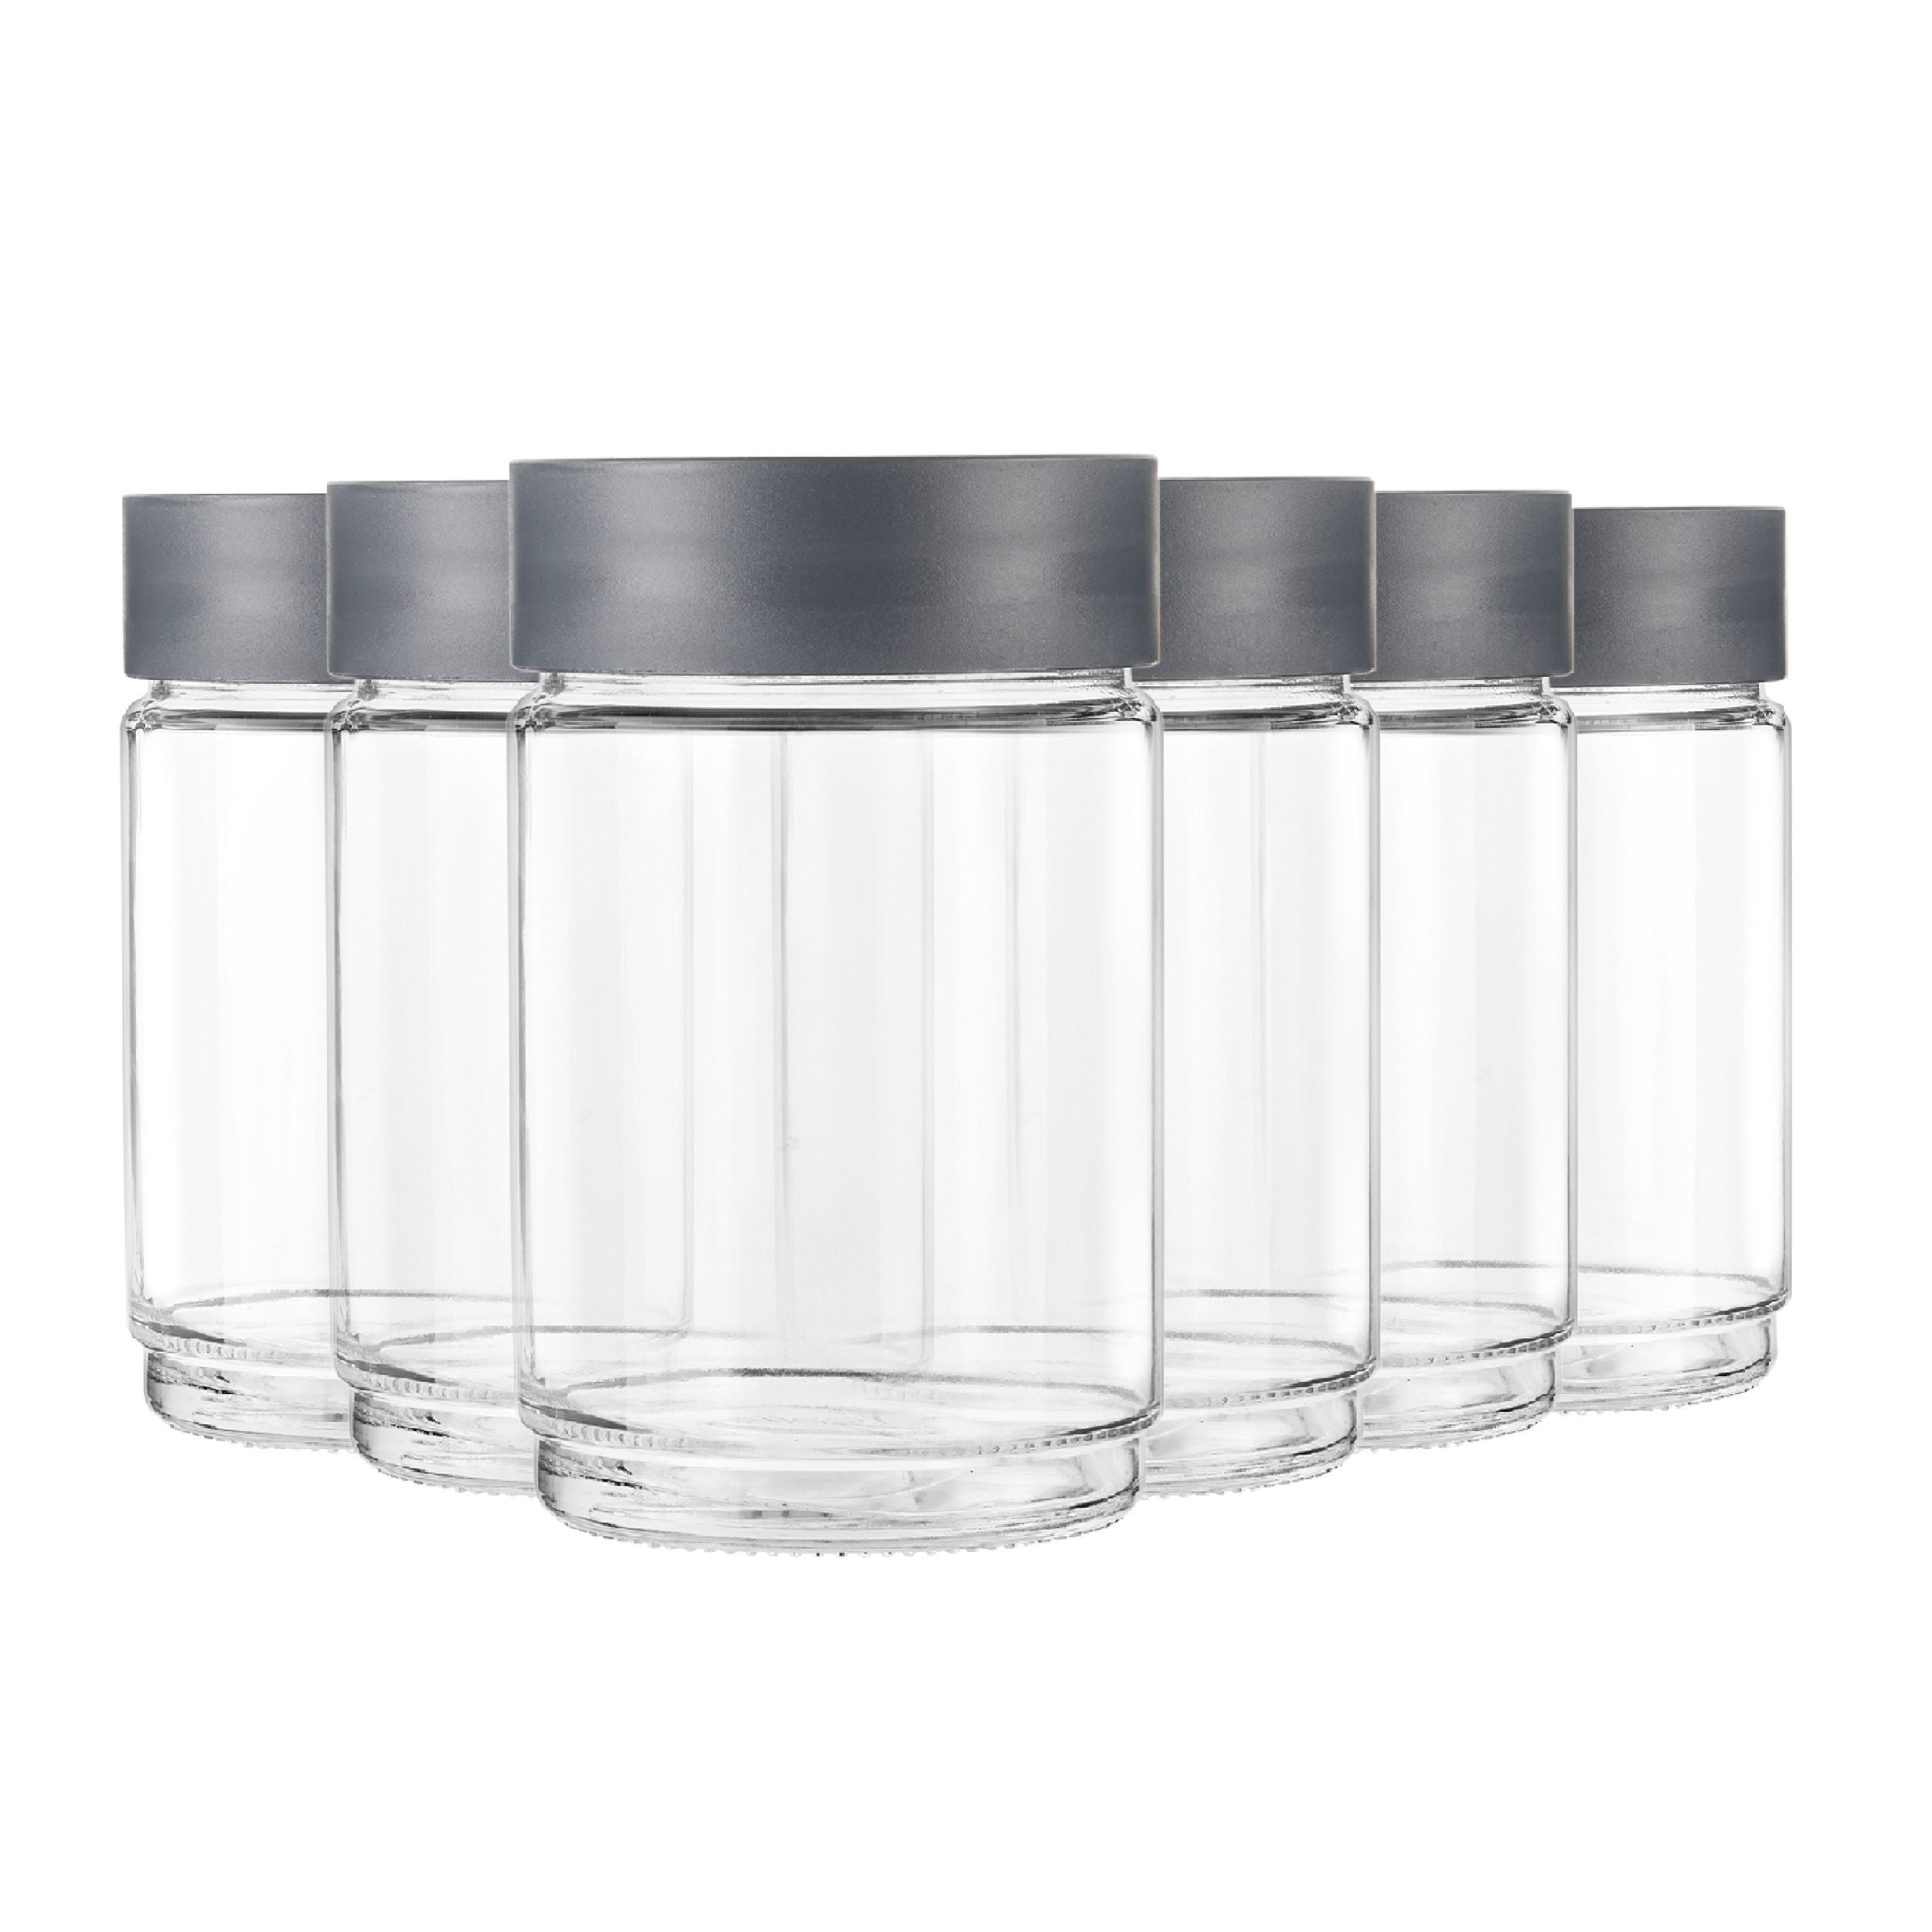 Modustack Glassy Storage Jar, 750ml, Set of 6 Grey / 750ml